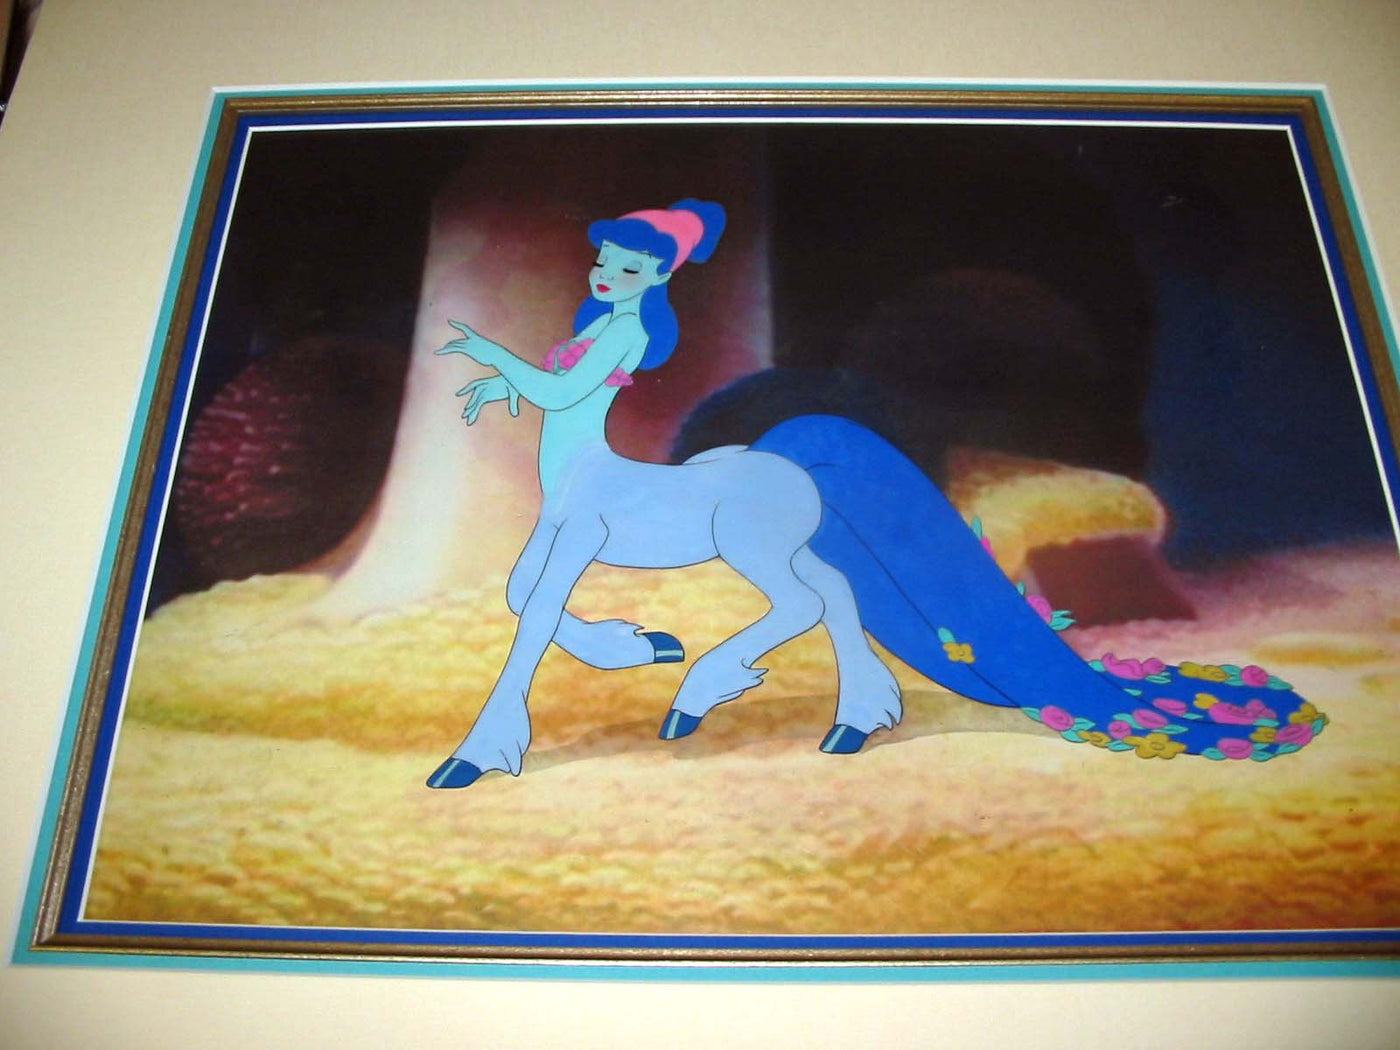 Original Walt Disney Production Cel of a Centaurette from Fantasia